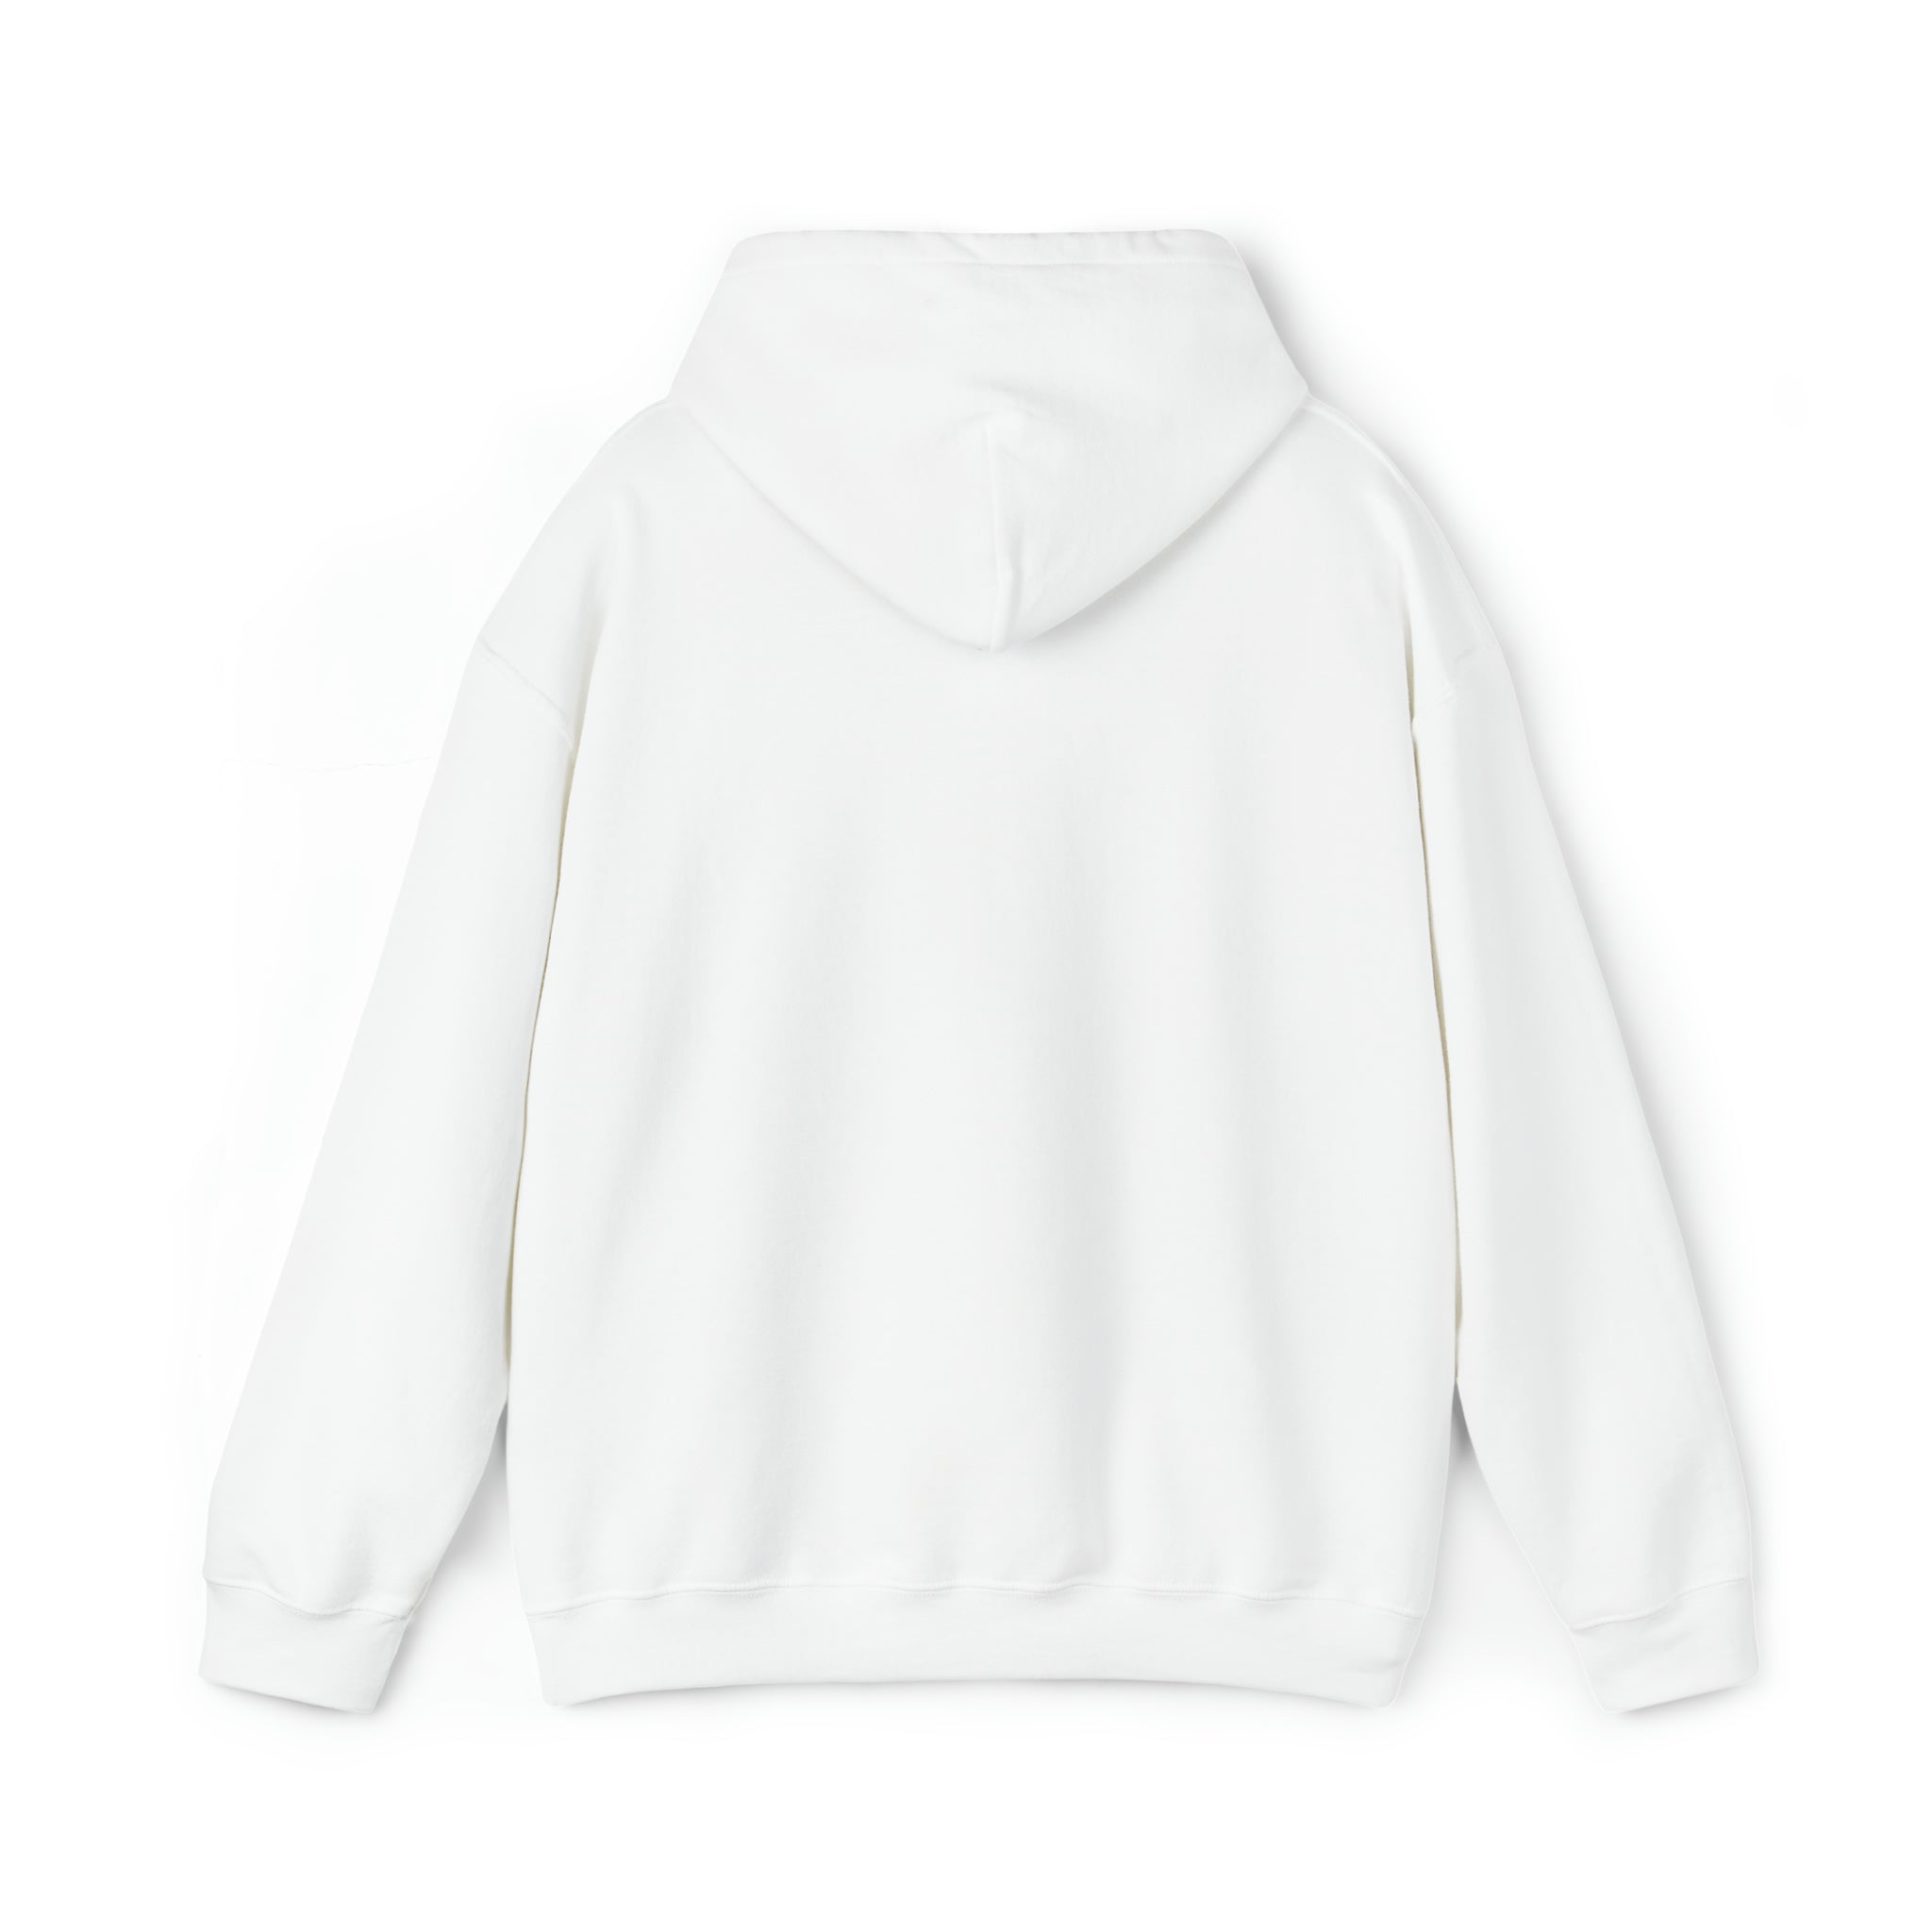 Fifth Year - Unisex Heavy Blend™ Hooded Sweatshirt